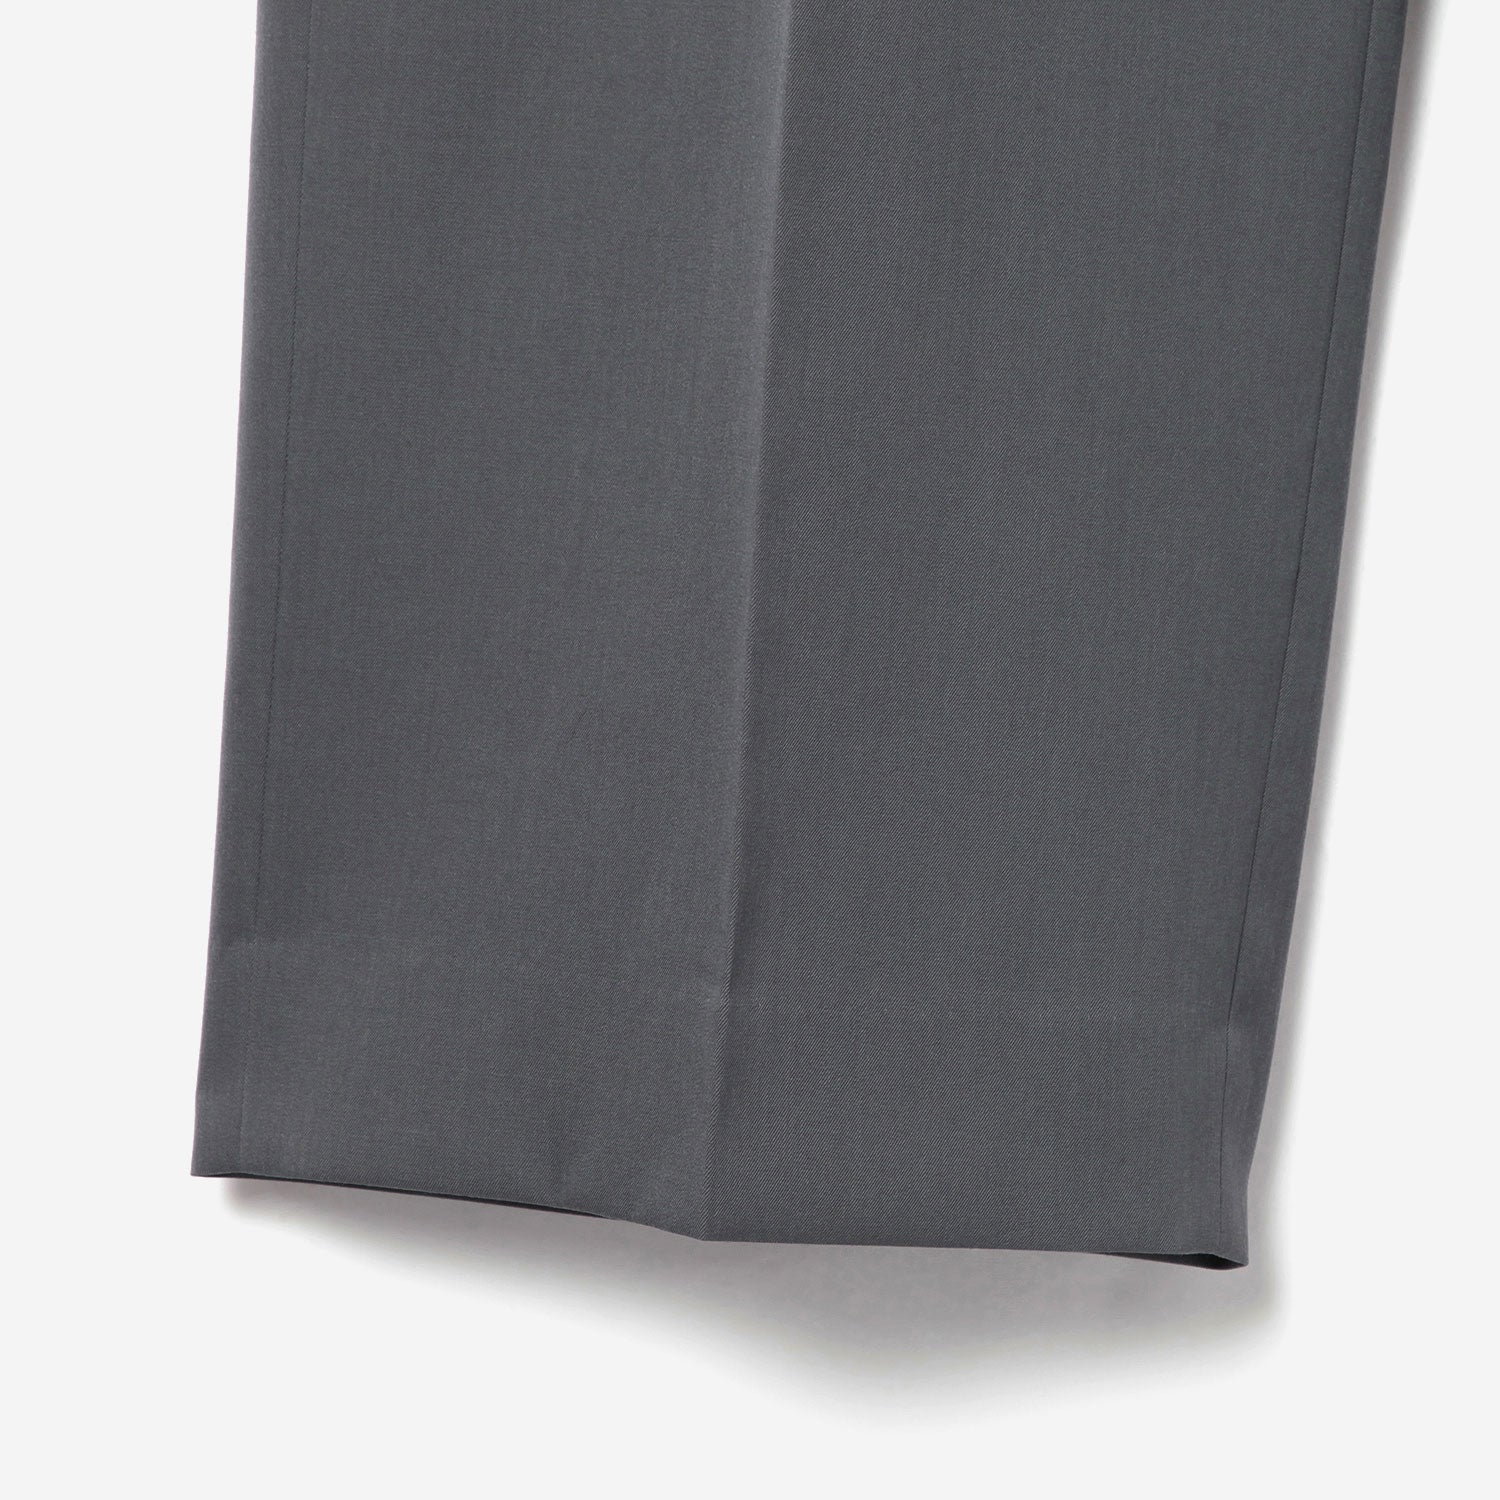 OSCAR / Super Semi-Wide Tailored Pants / gray